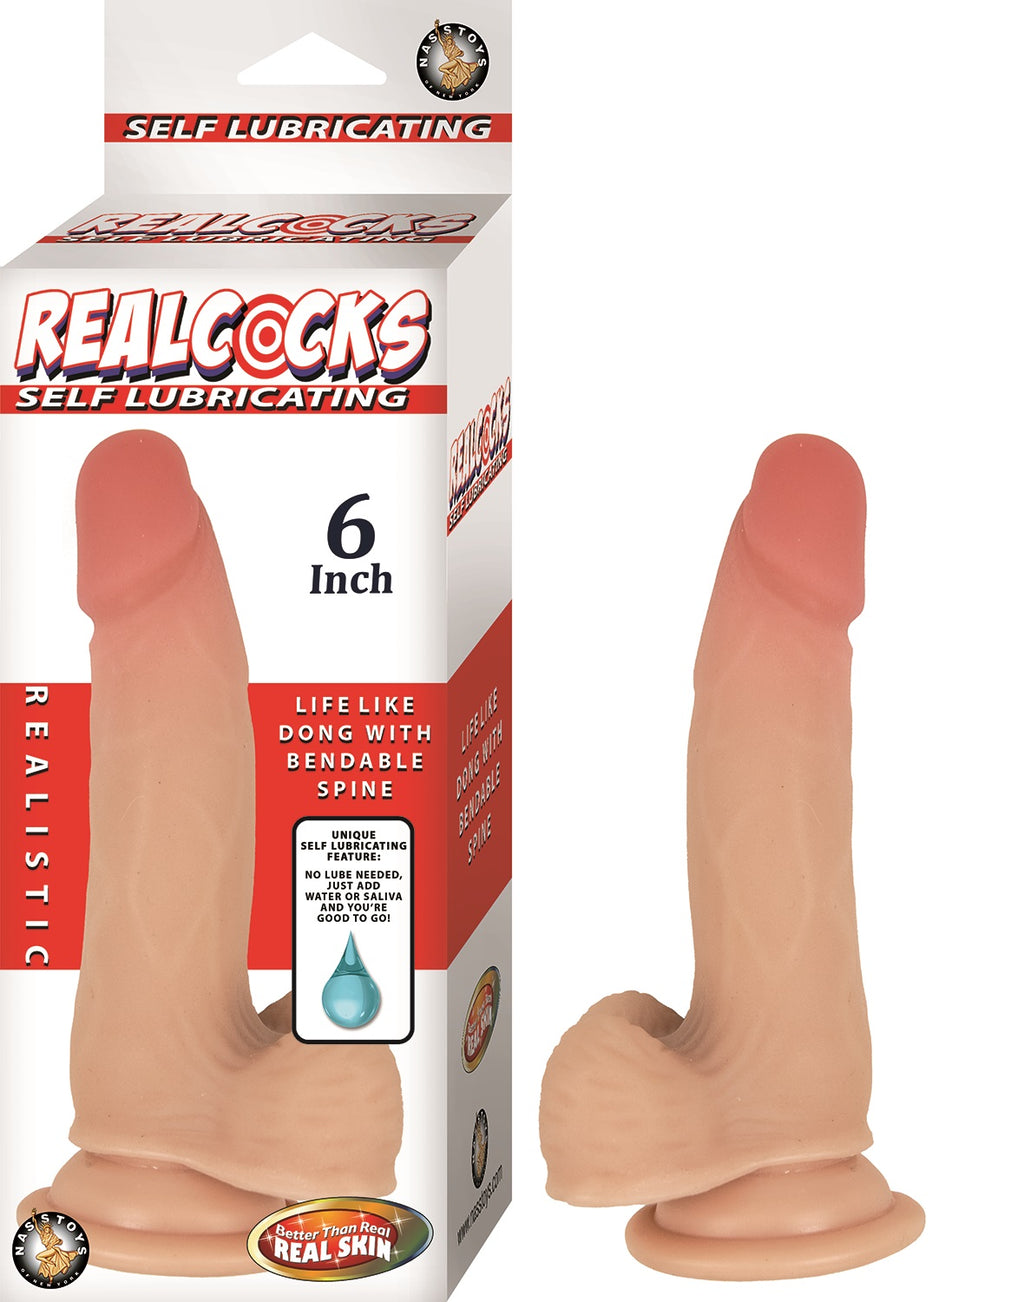 Realcocks Self Lubricating Dong - 6 Inch - Flesh NW2933